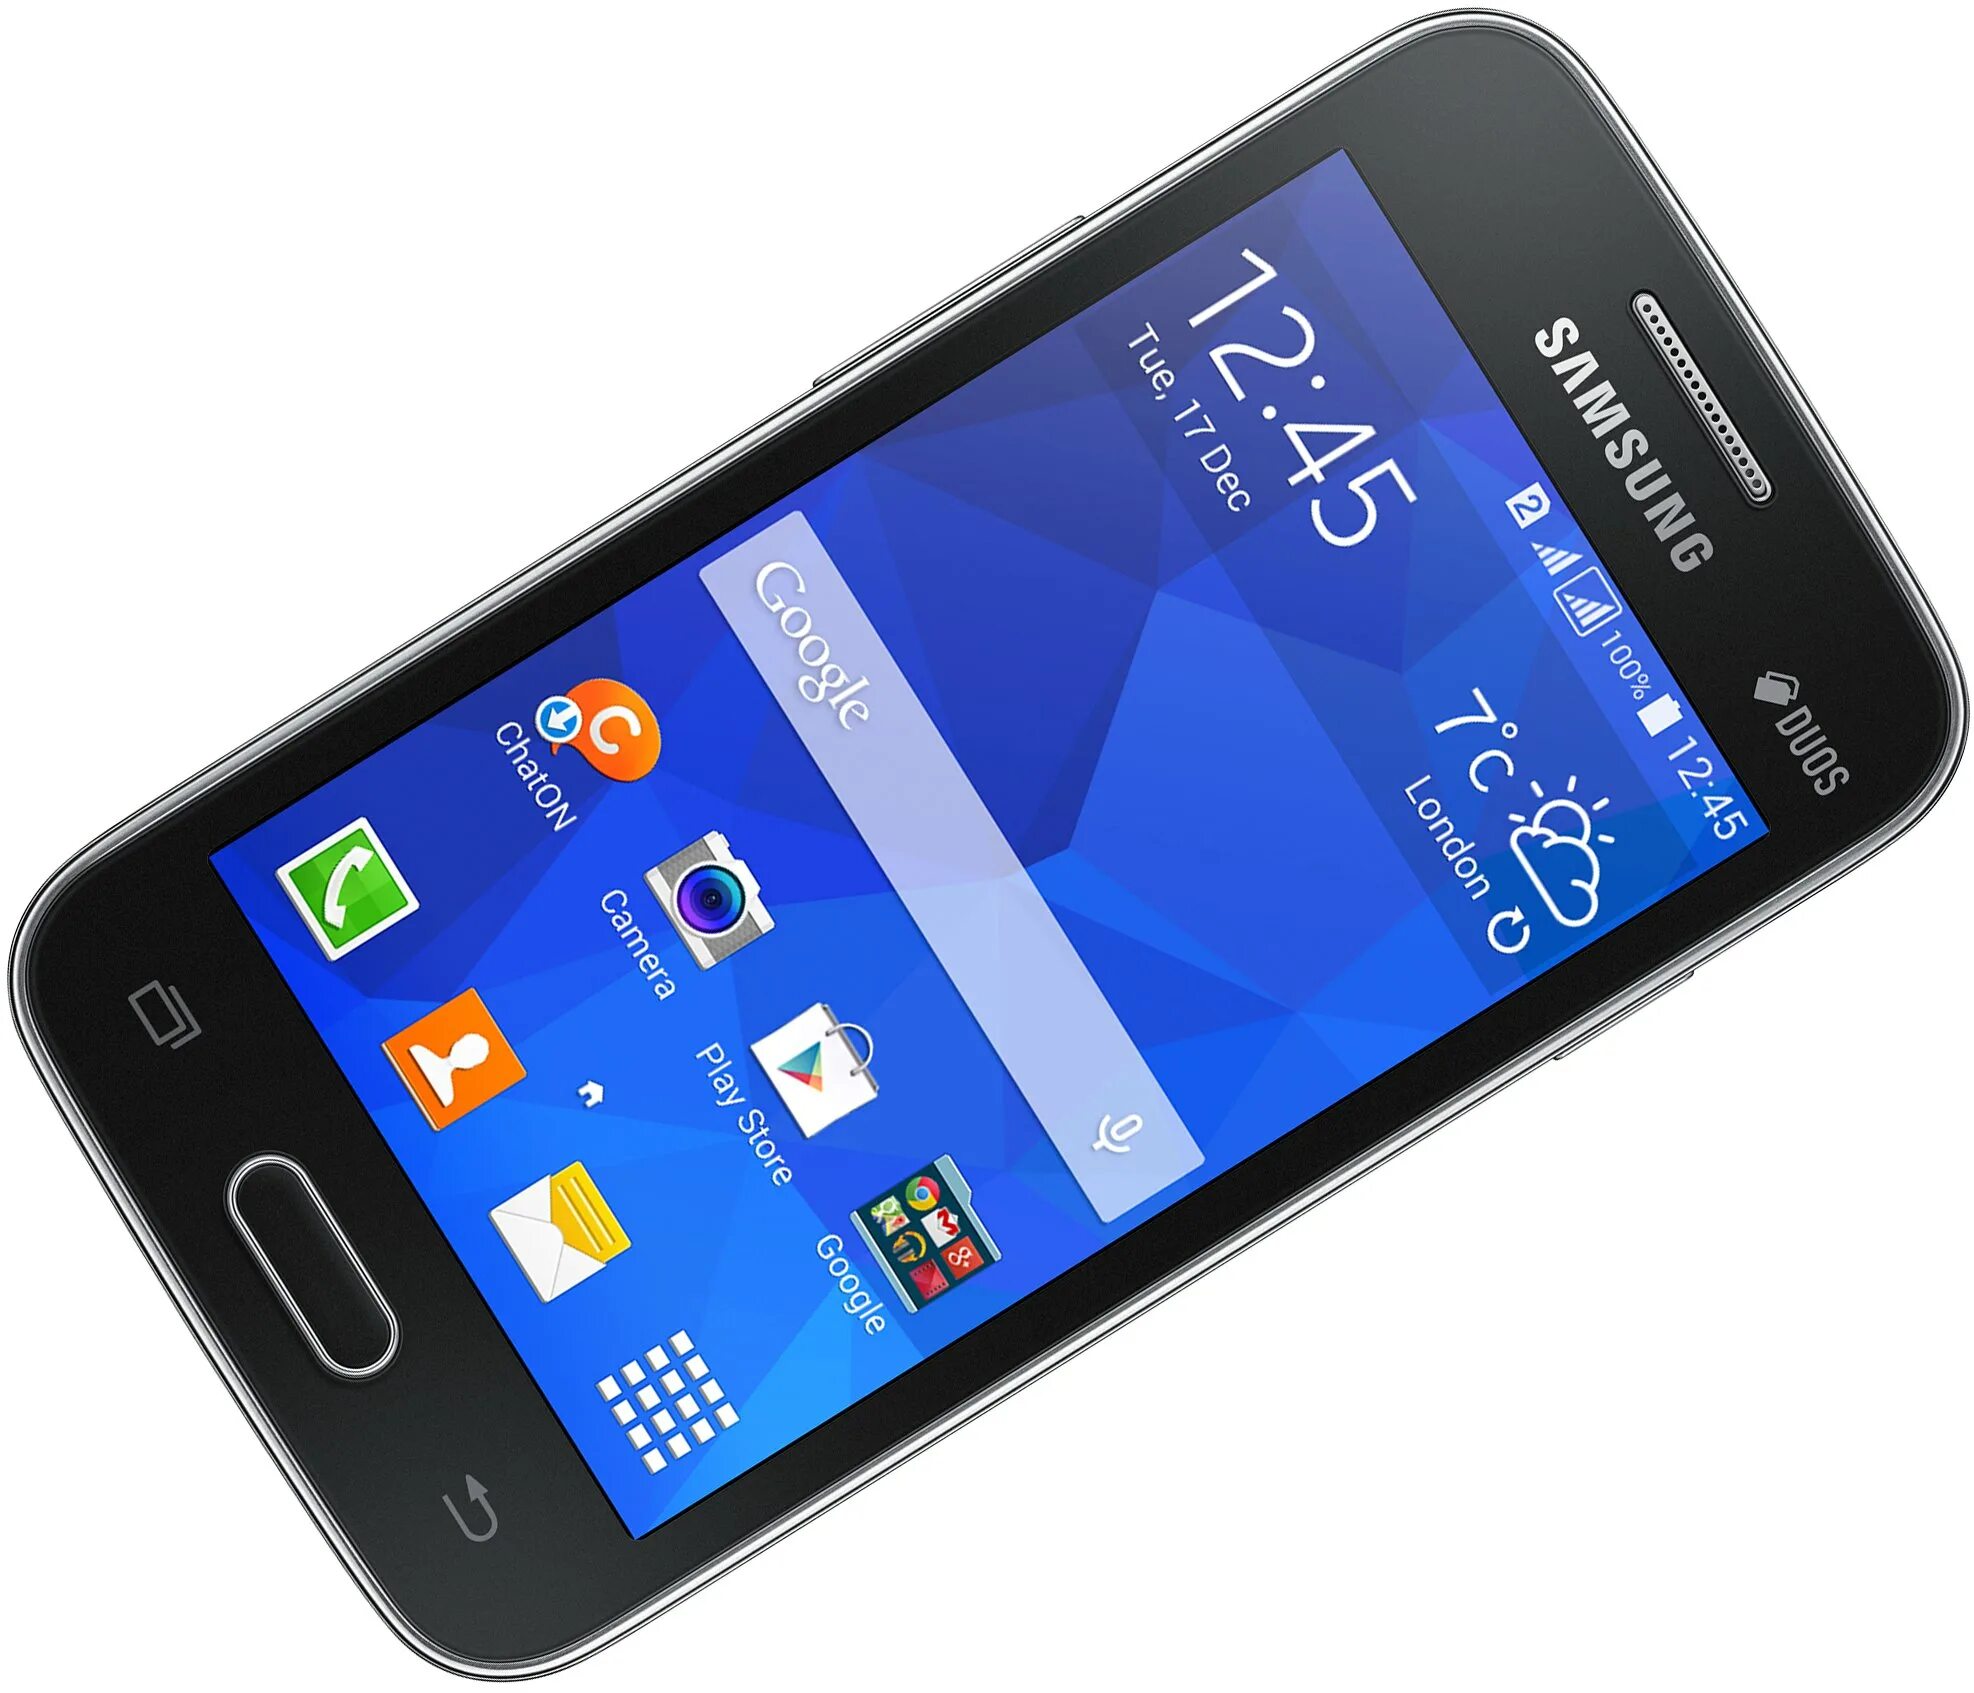 Samsung SM-g355h. Samsung SM-g313h. Samsung Galaxy Ace 4. Samsung Galaxy Ace 4 Lite.